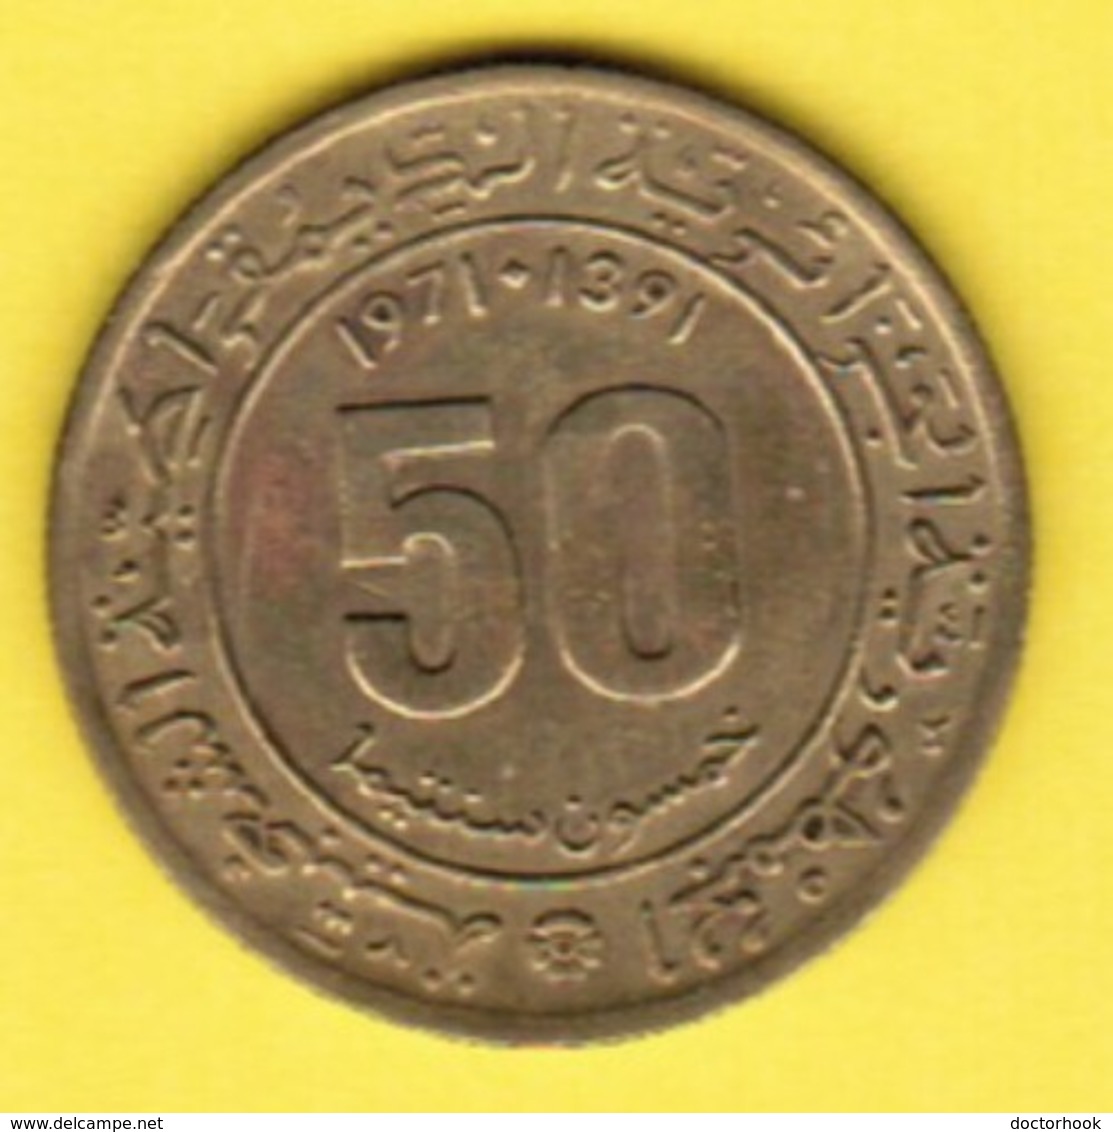 ALGERIA   50 CENTIMES 1971 (AH-1391) (KM # 102) #5352 - Algerien